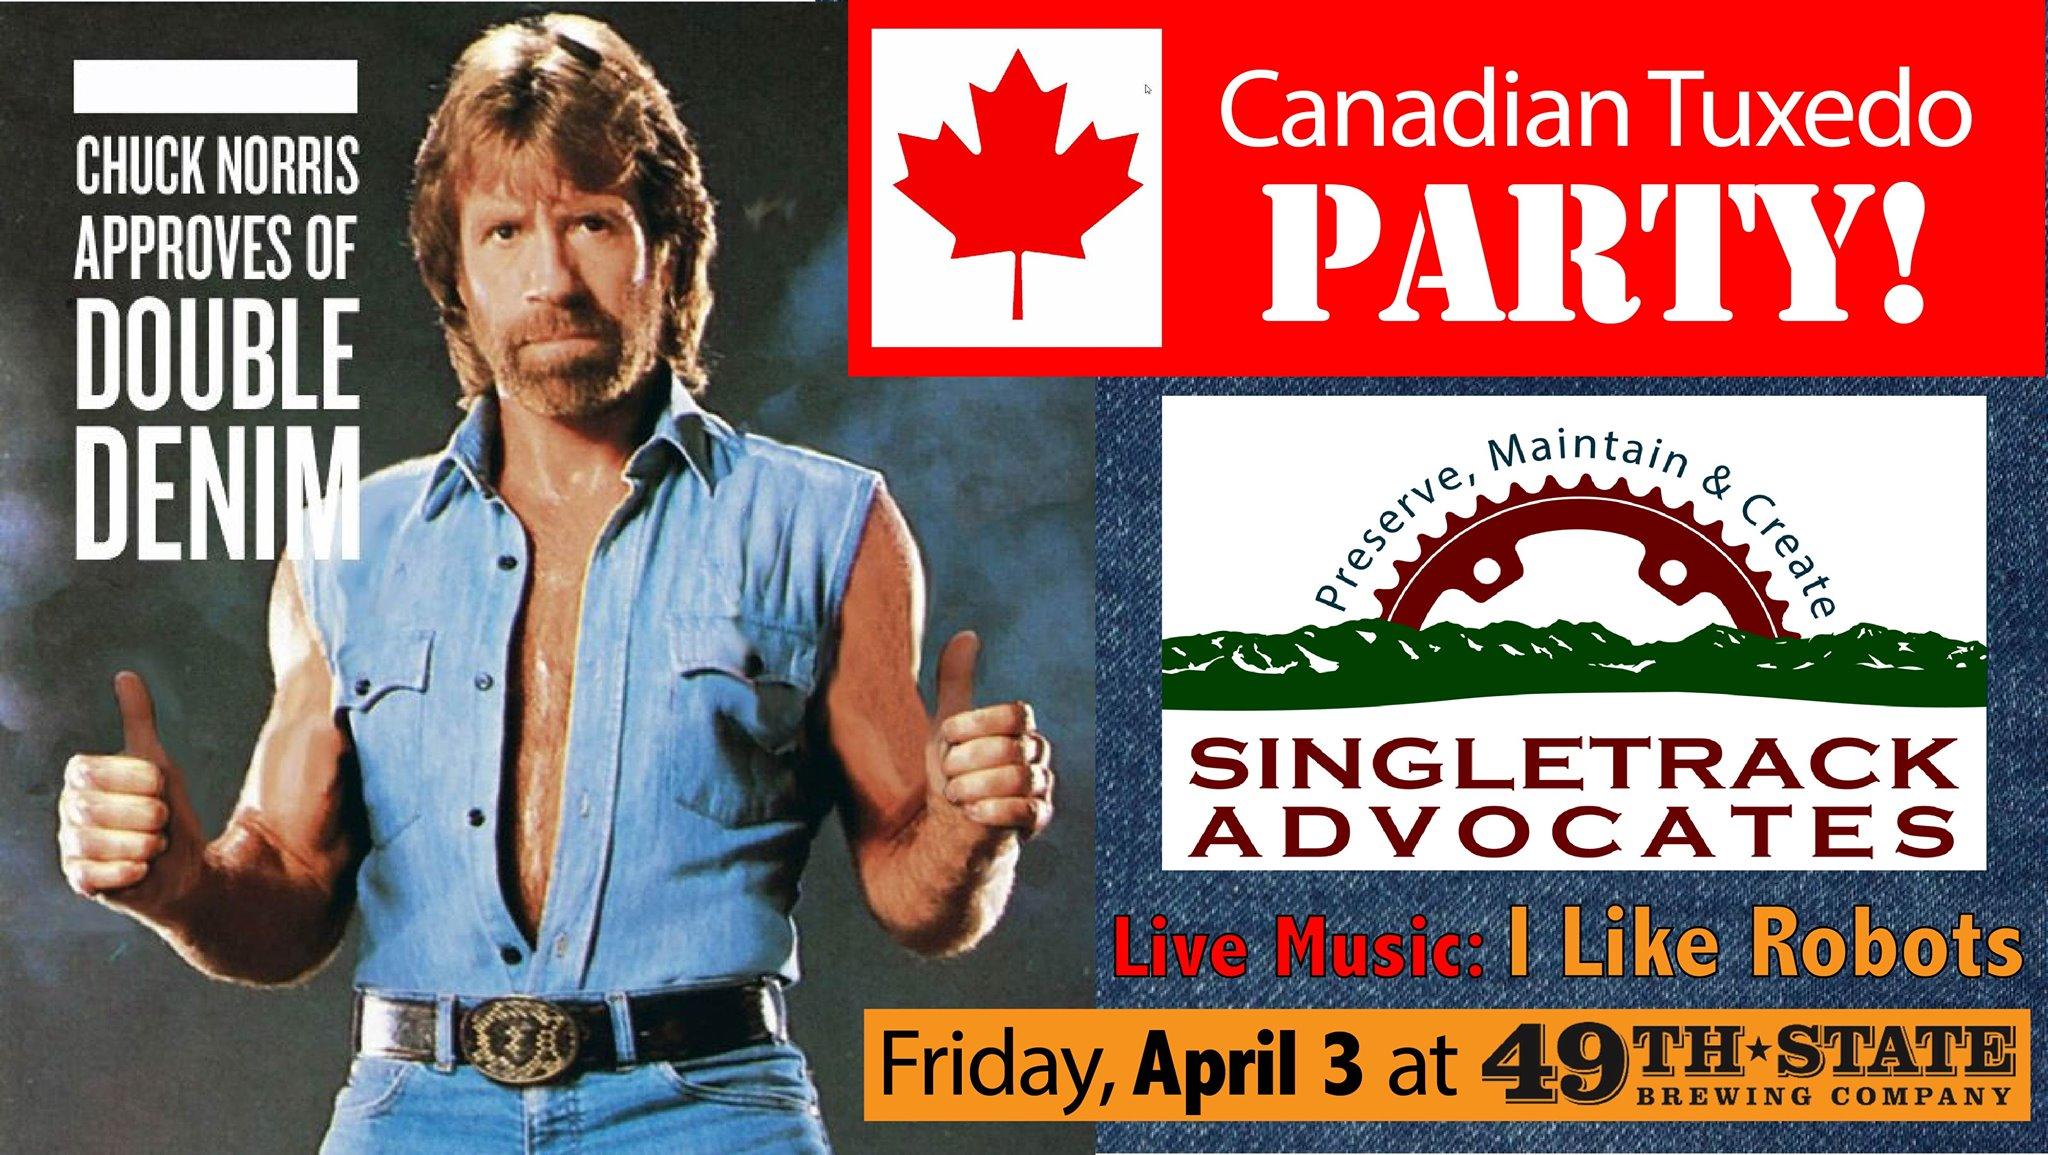 Singletrack Advocates Annual Party!!! Canadian Tuxedo Style